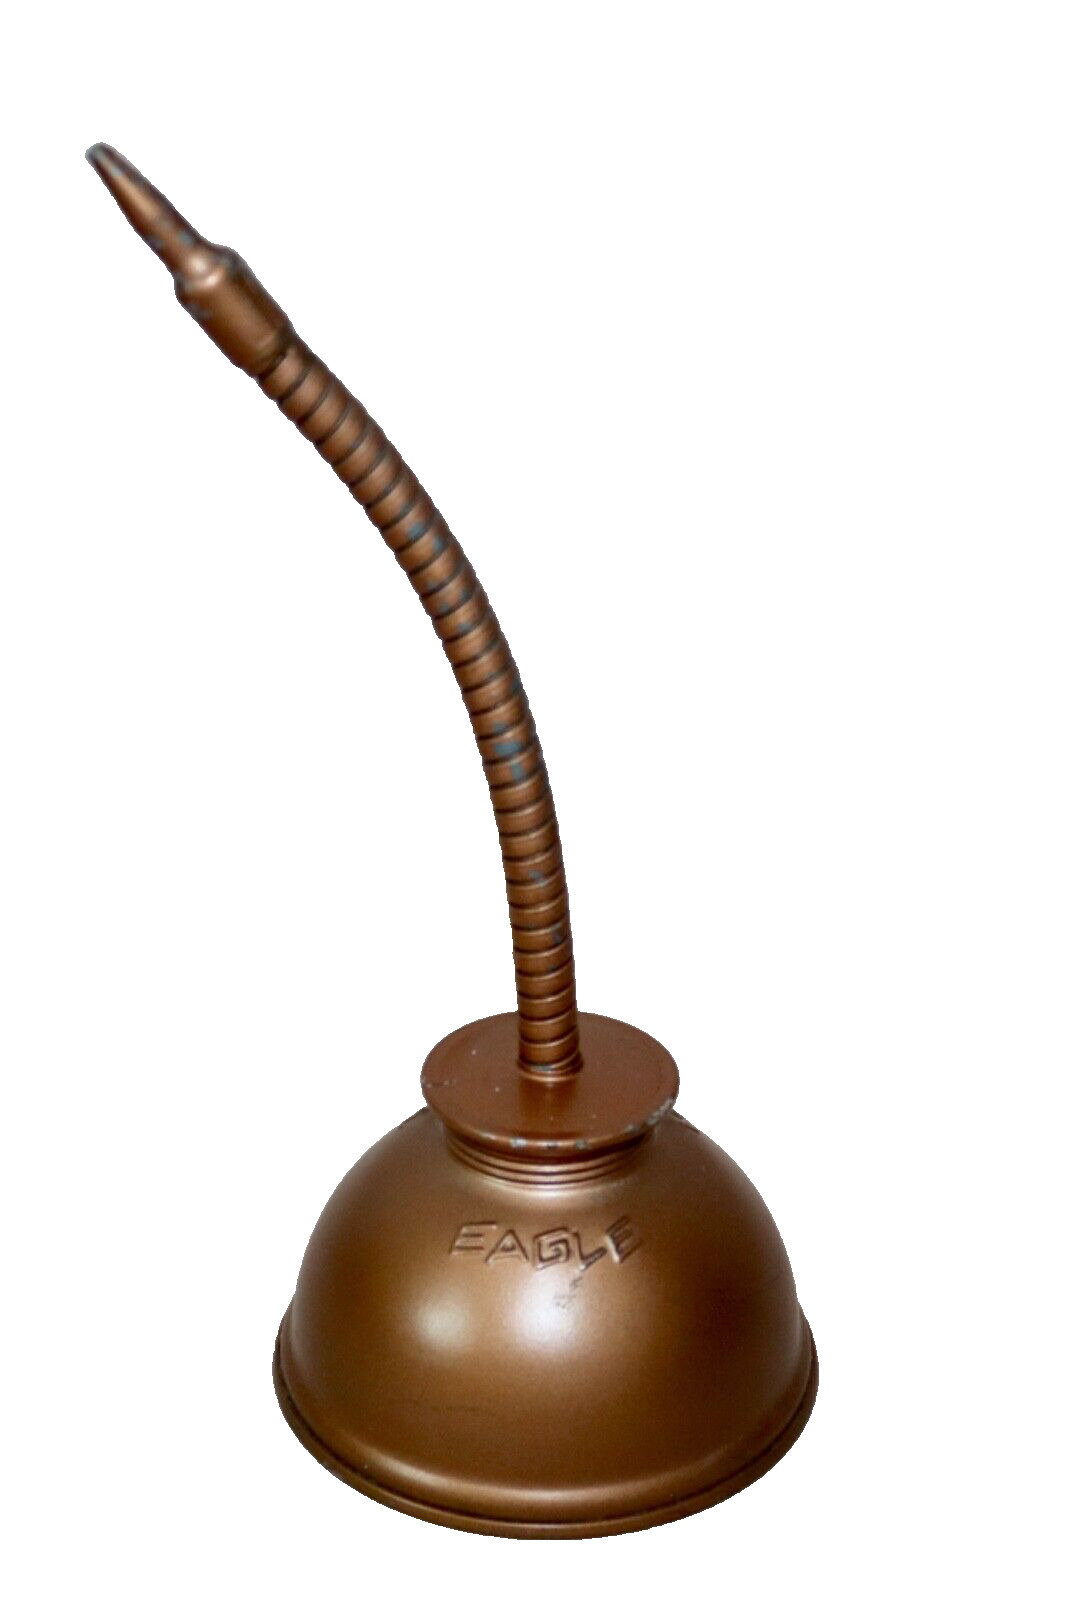 Eagle Hand Pump Copper Color Oil Can With Flexible Nozzle